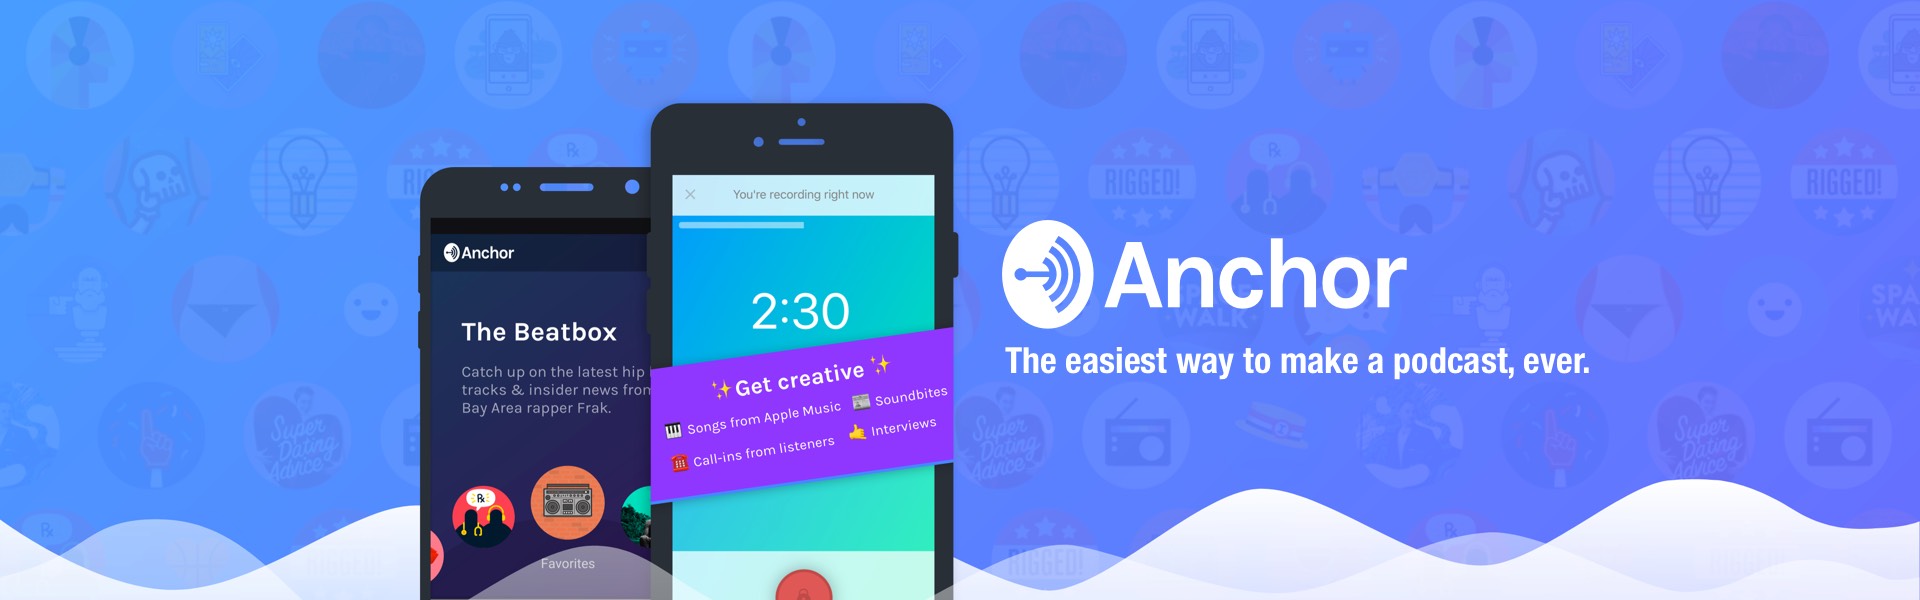 anchor app download